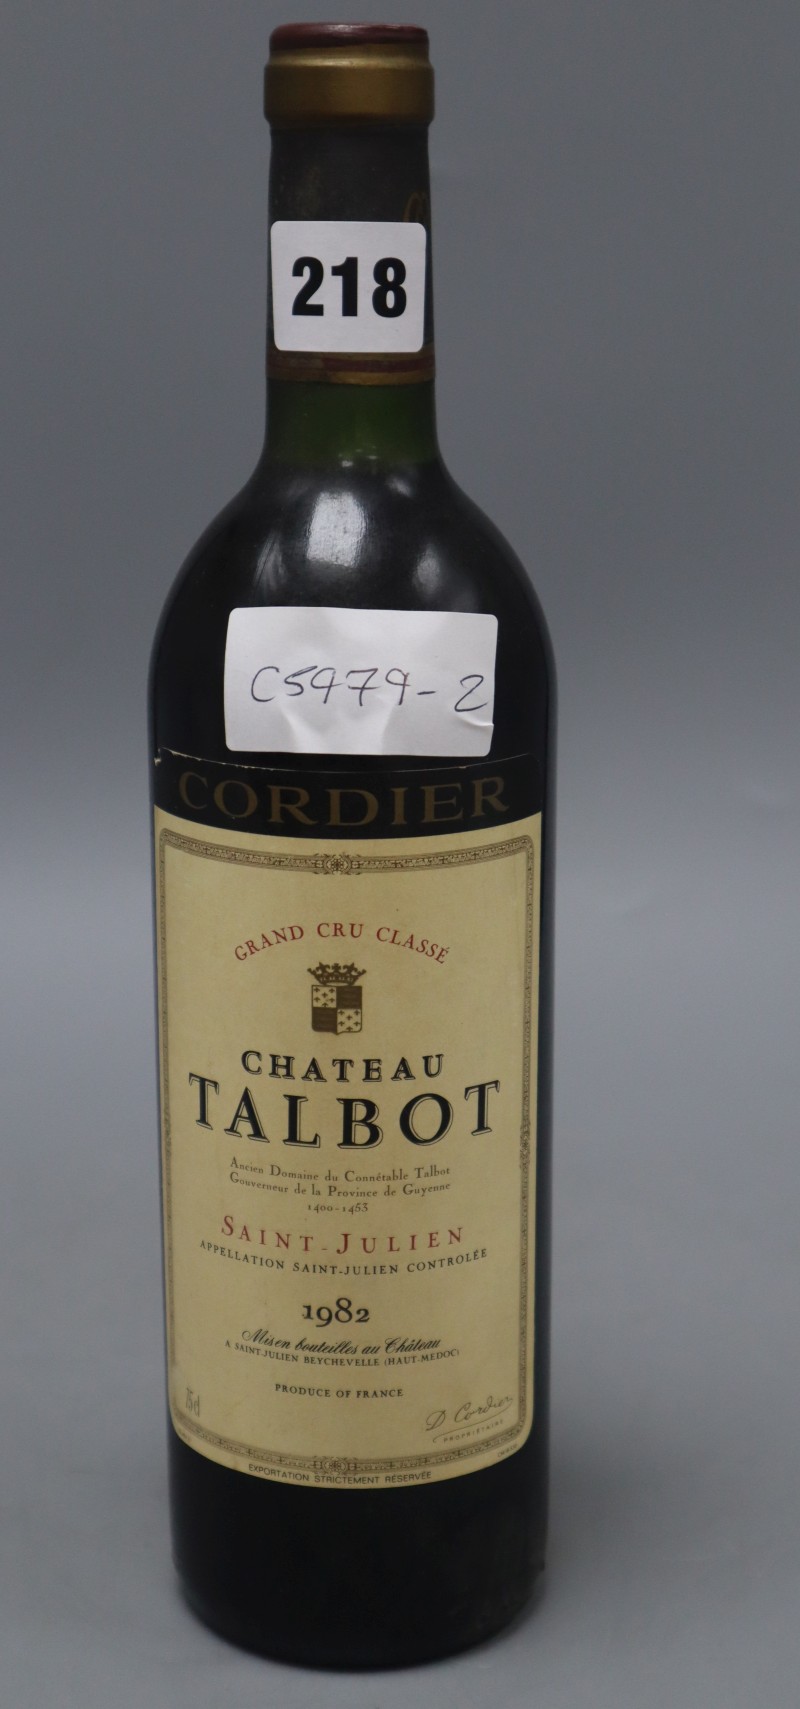 A bottle of Chateau Talbot St Julien 1982